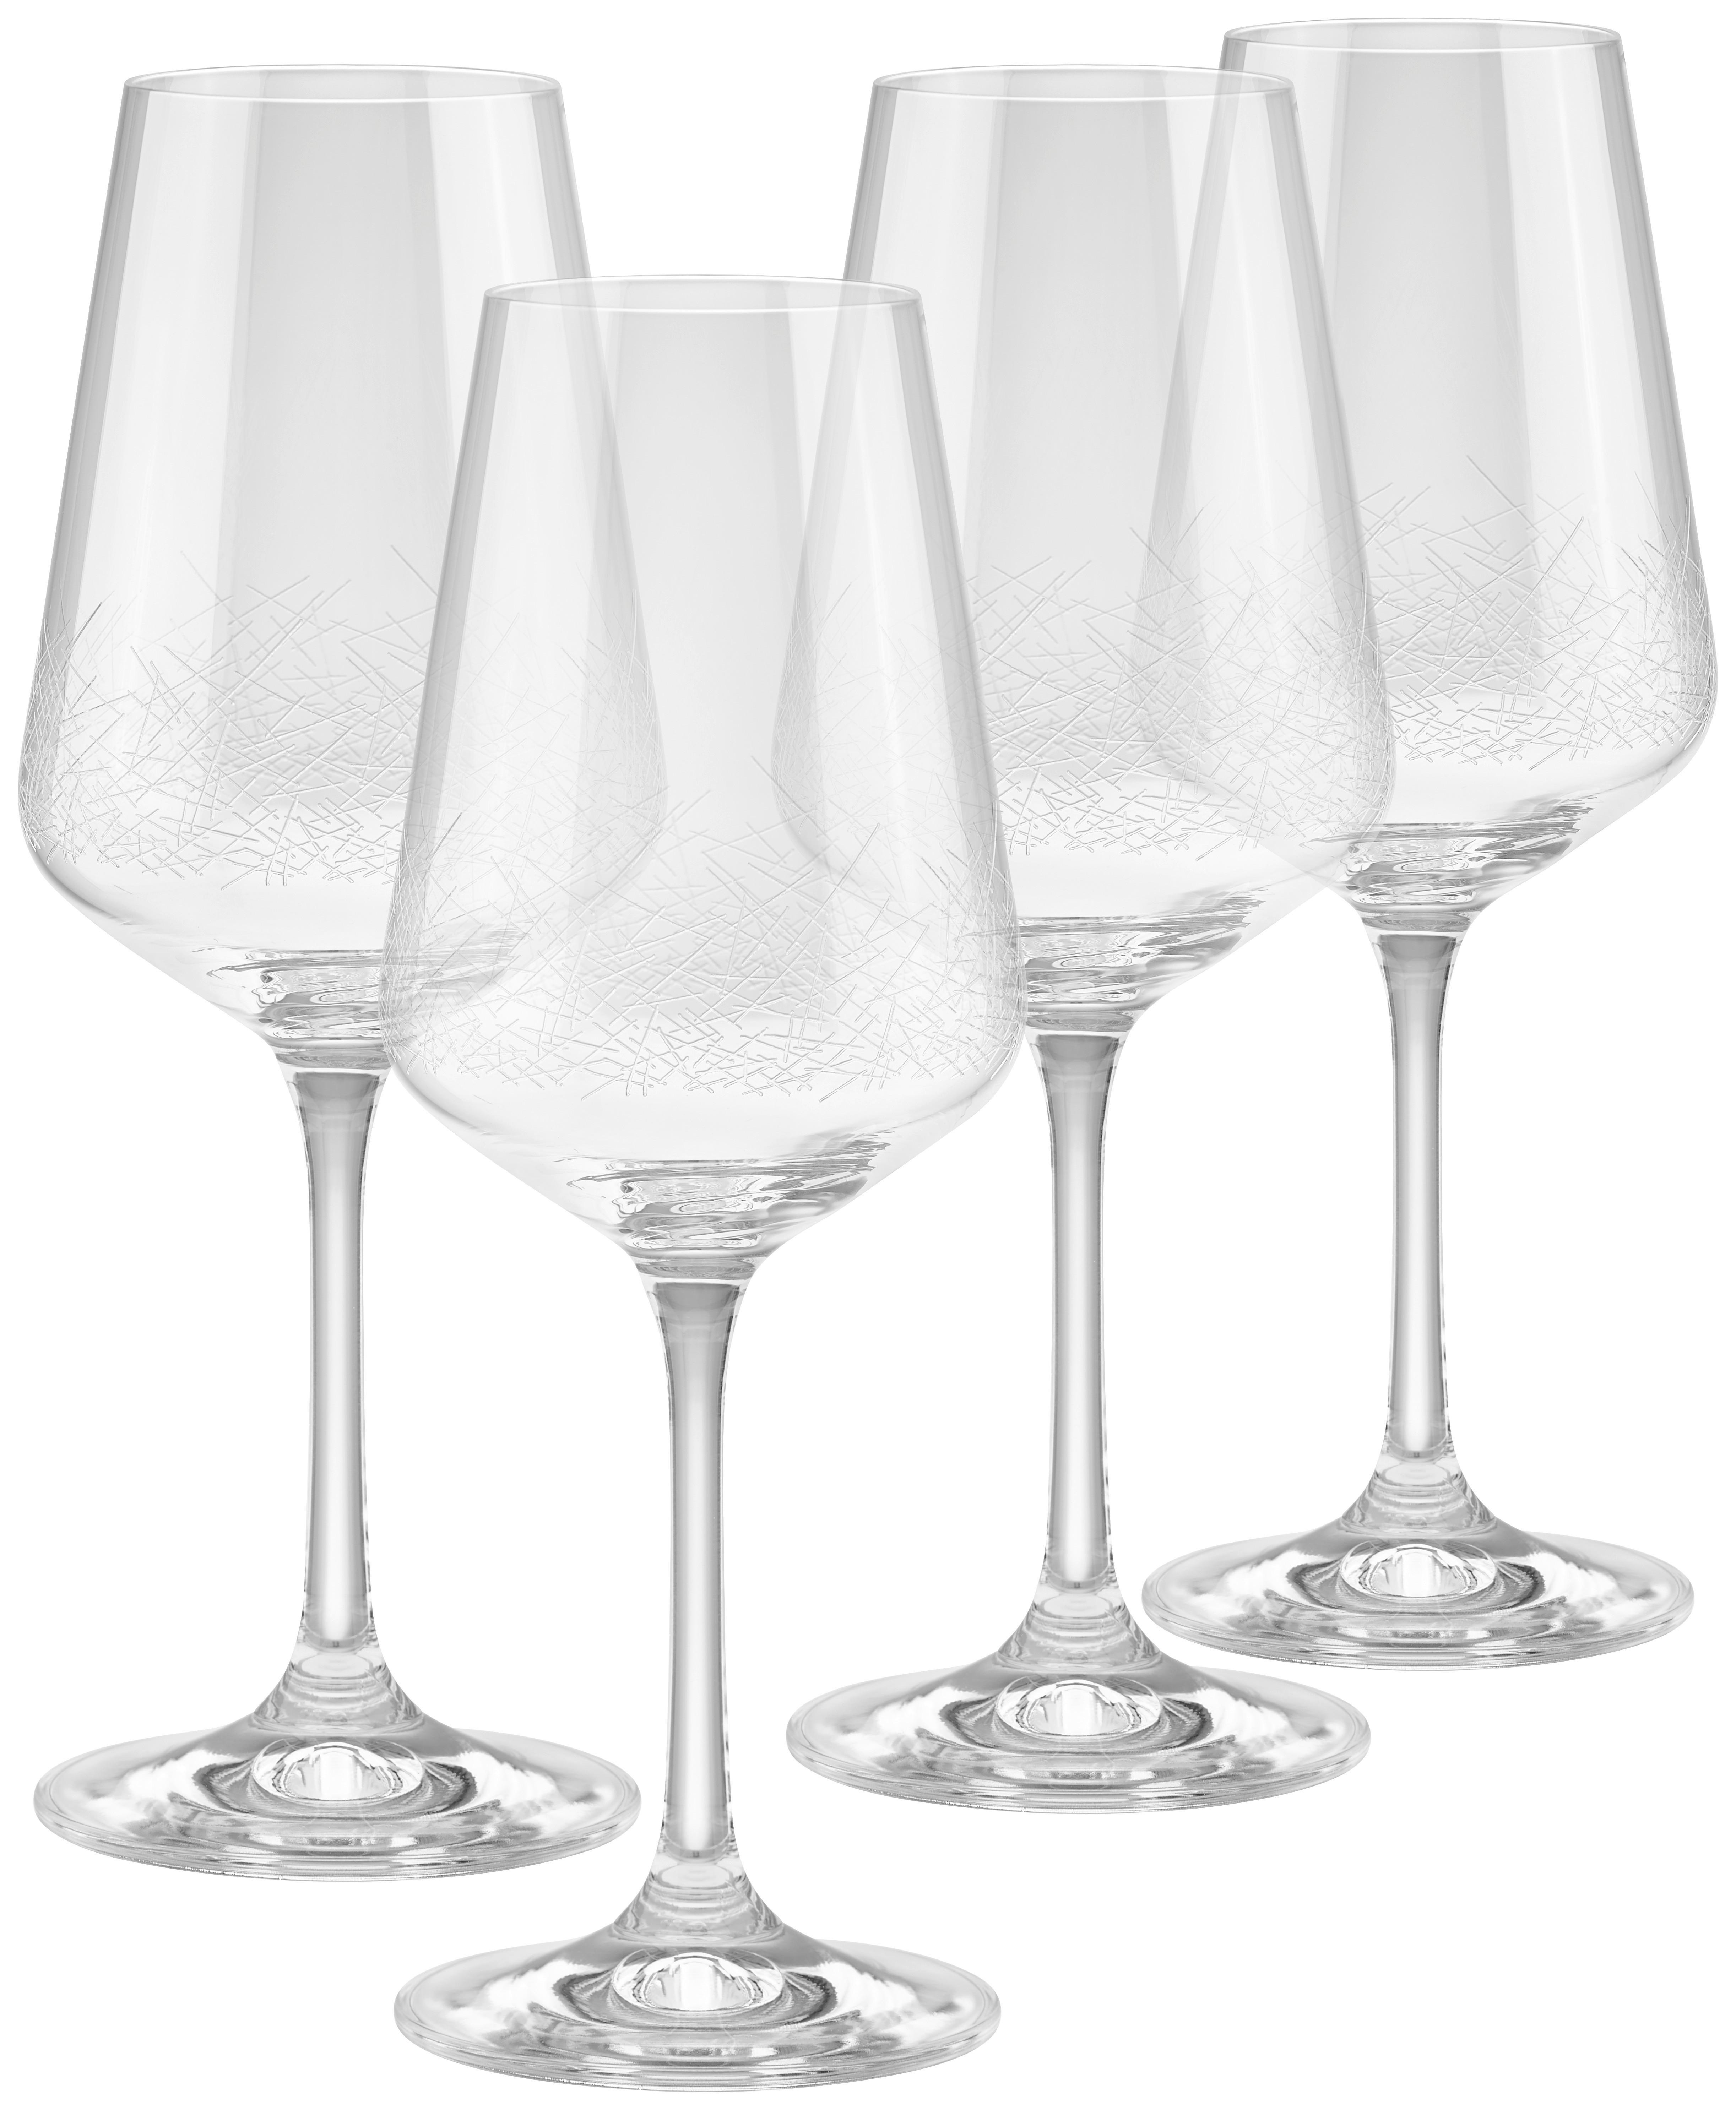 Set pahare Crystal chic - clar, Modern, sticlă (0,35l) - Premium Living